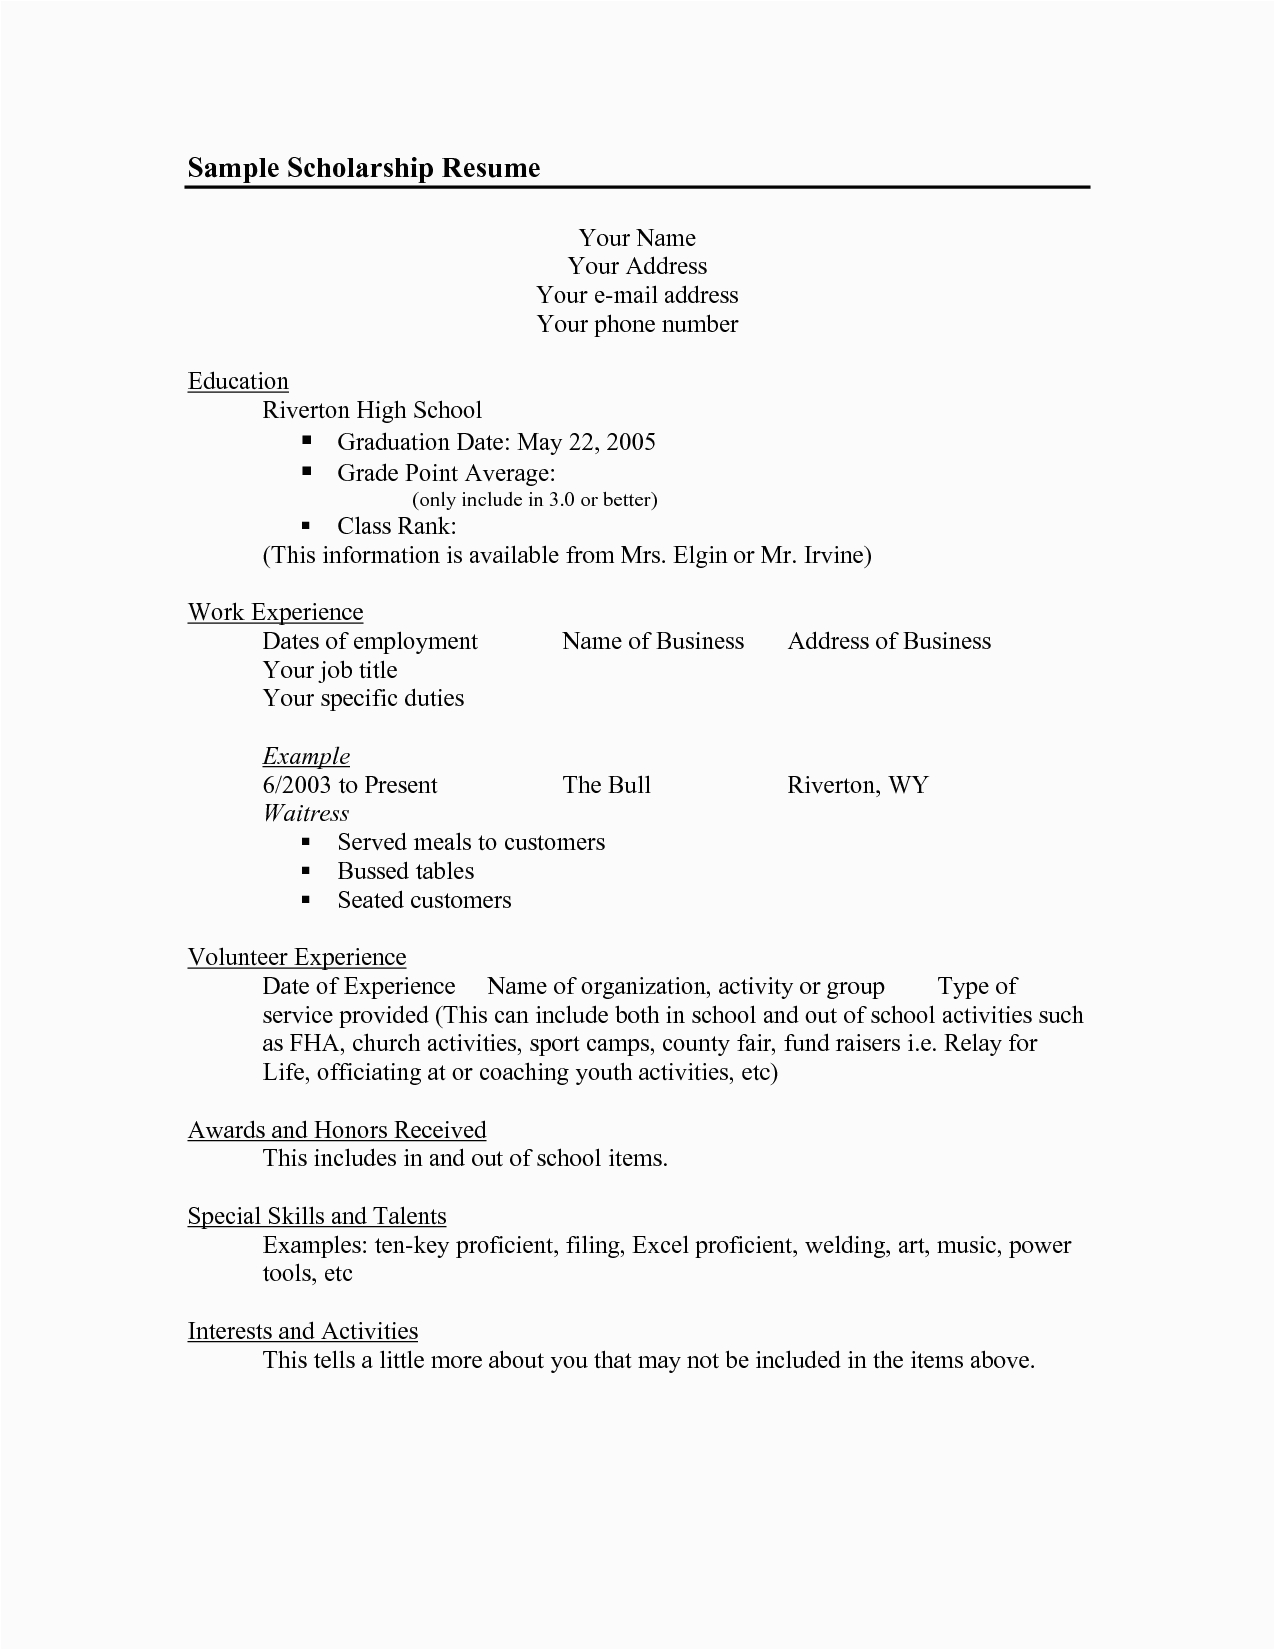 Sample Resume for College Scholarship Application Scholarship Resume Template Fsgcr Mvxhldbr